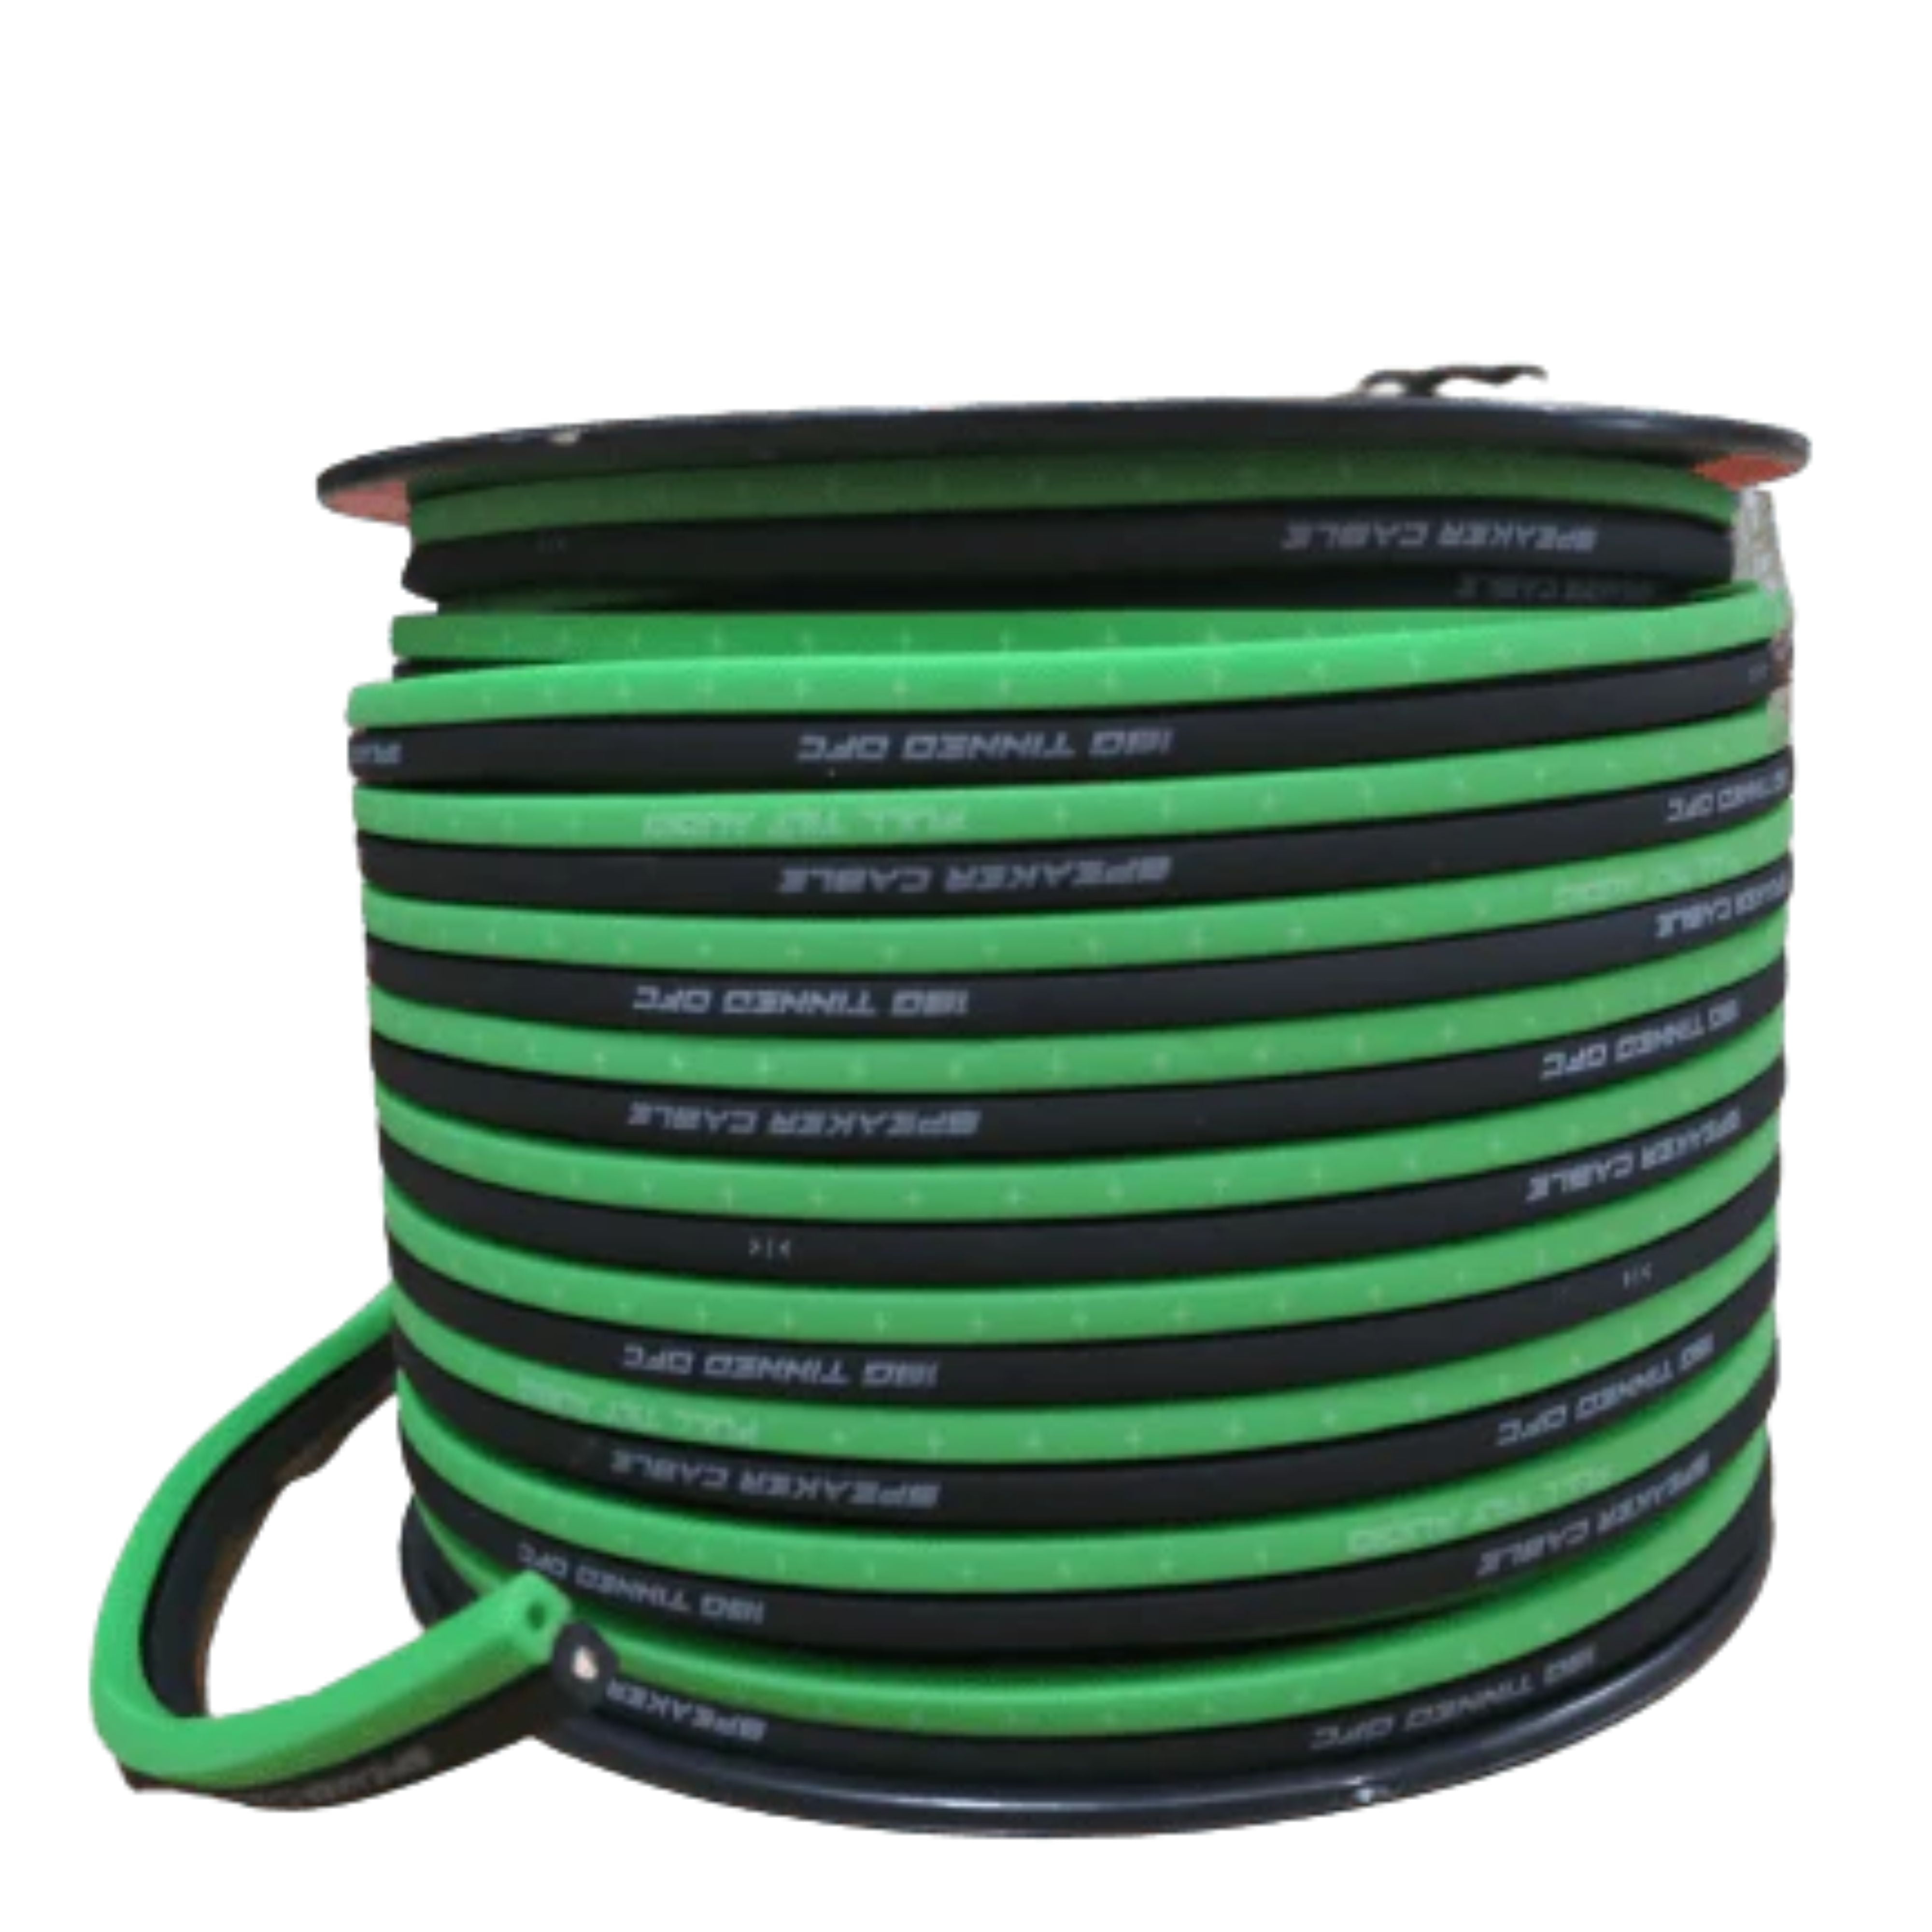 InstallGear Brown 12 AWG Gauge Speaker Wire - 99.9% Oxygen-Free